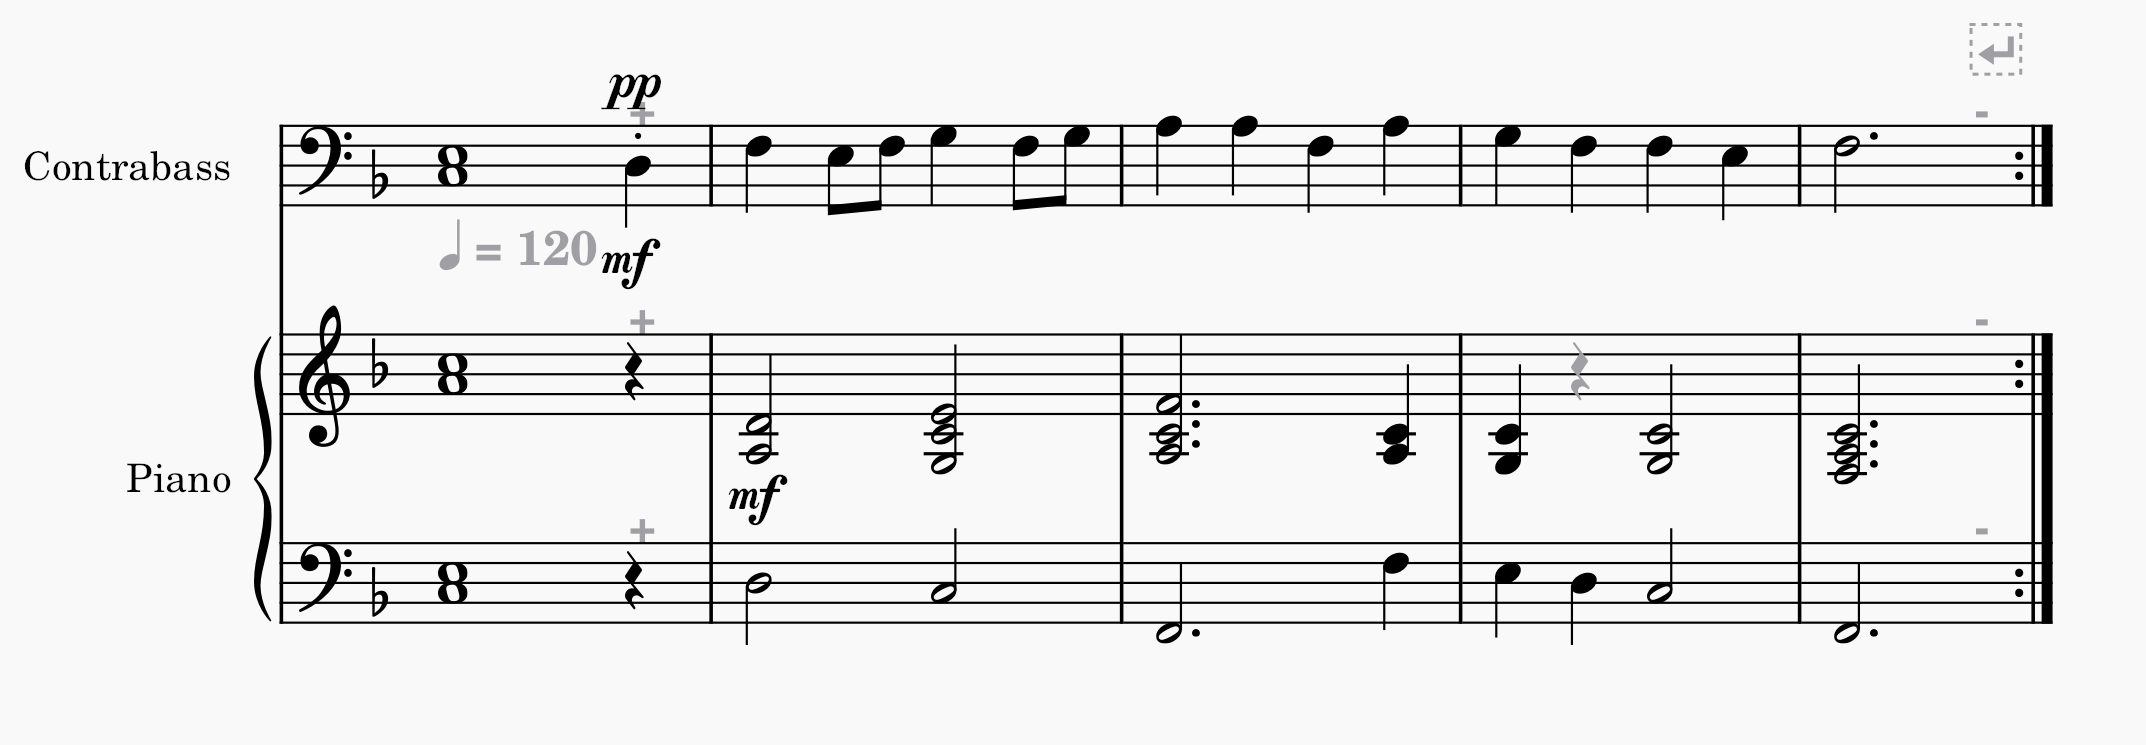 A screen shot of musecore notation